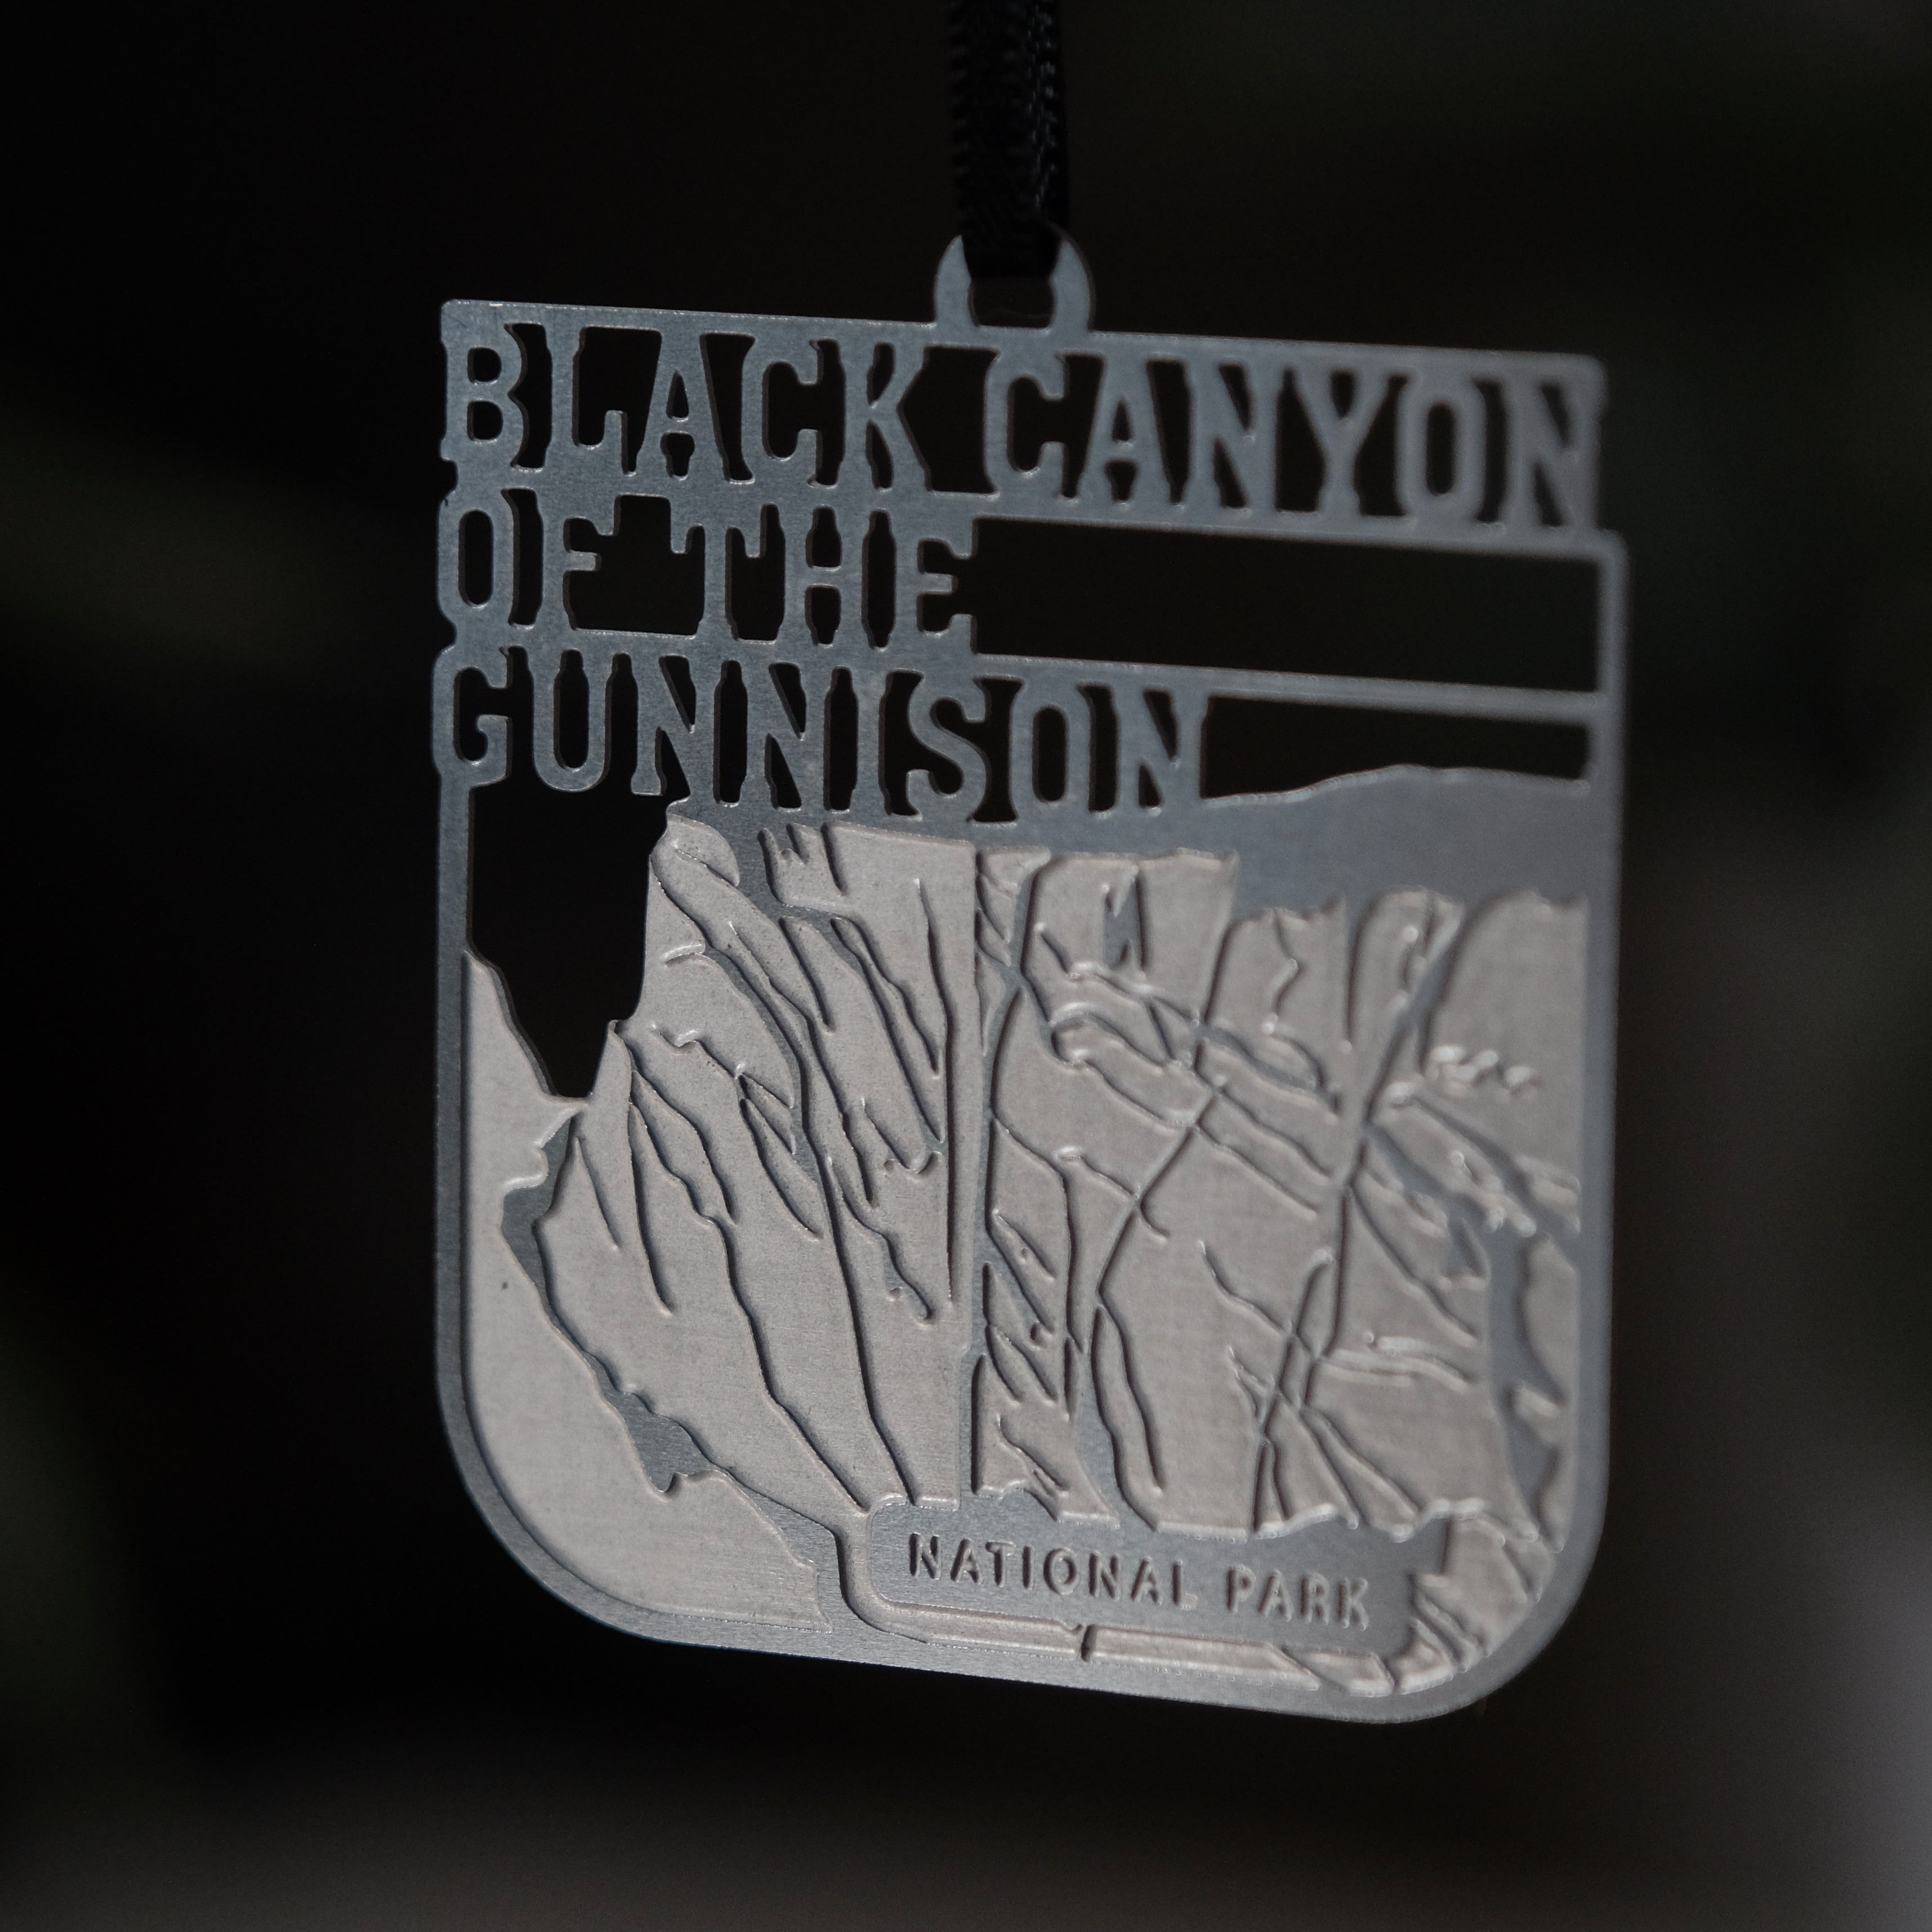 Black Canyon of Gunnison National Park